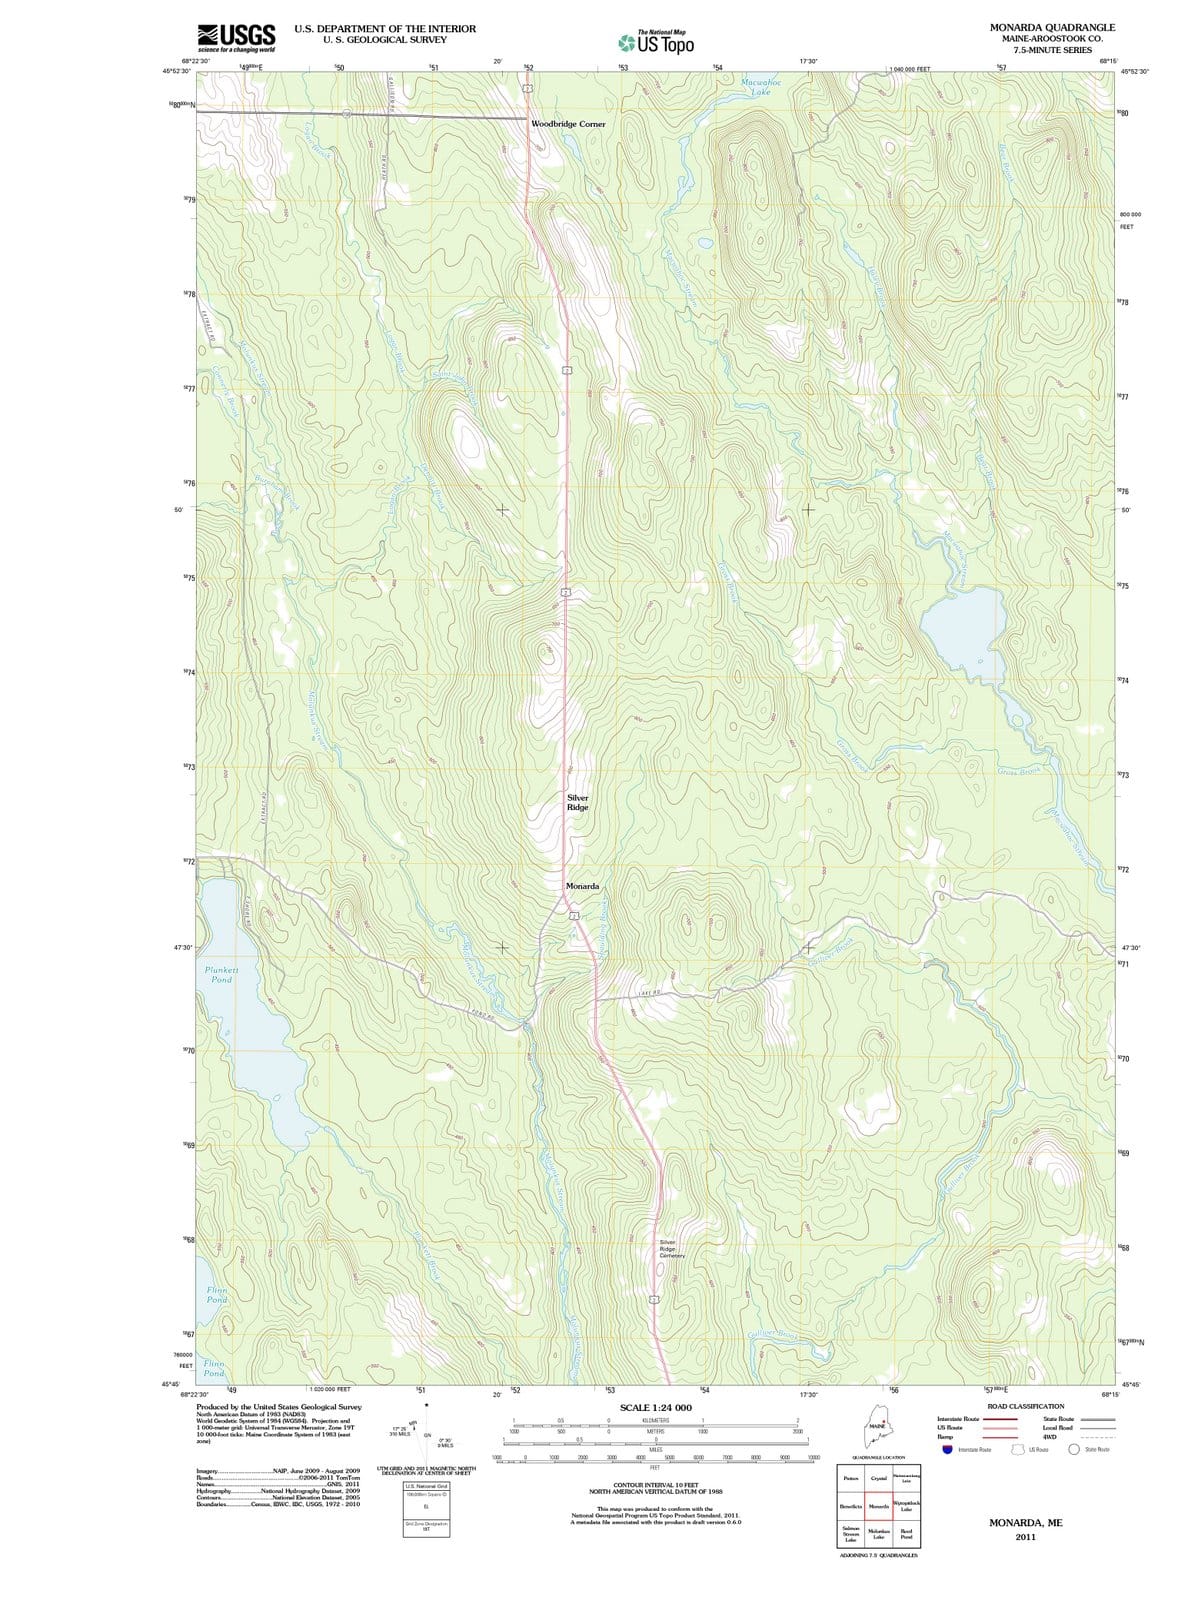 2011 Monarda, ME - Maine - USGS Topographic Map